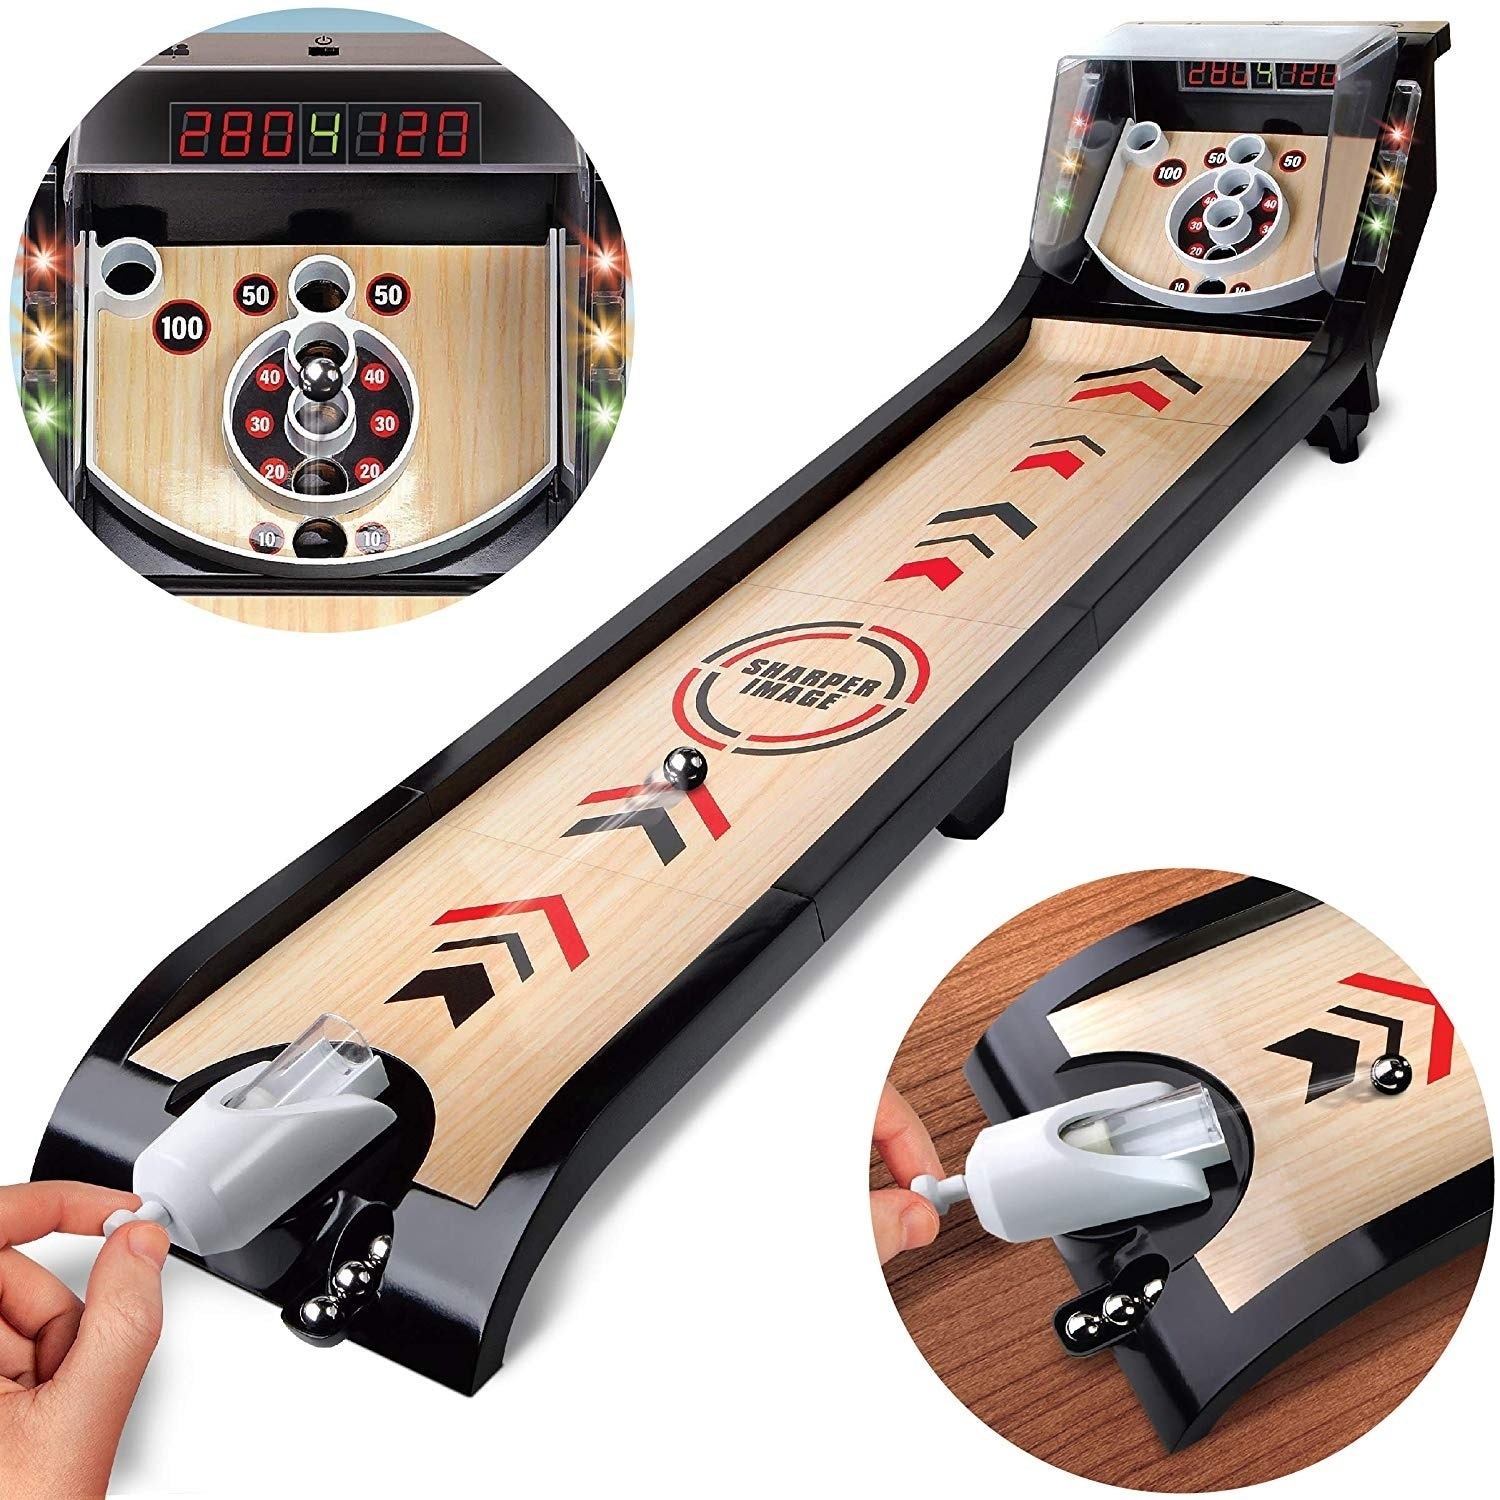 ideal electronic arcade speedball